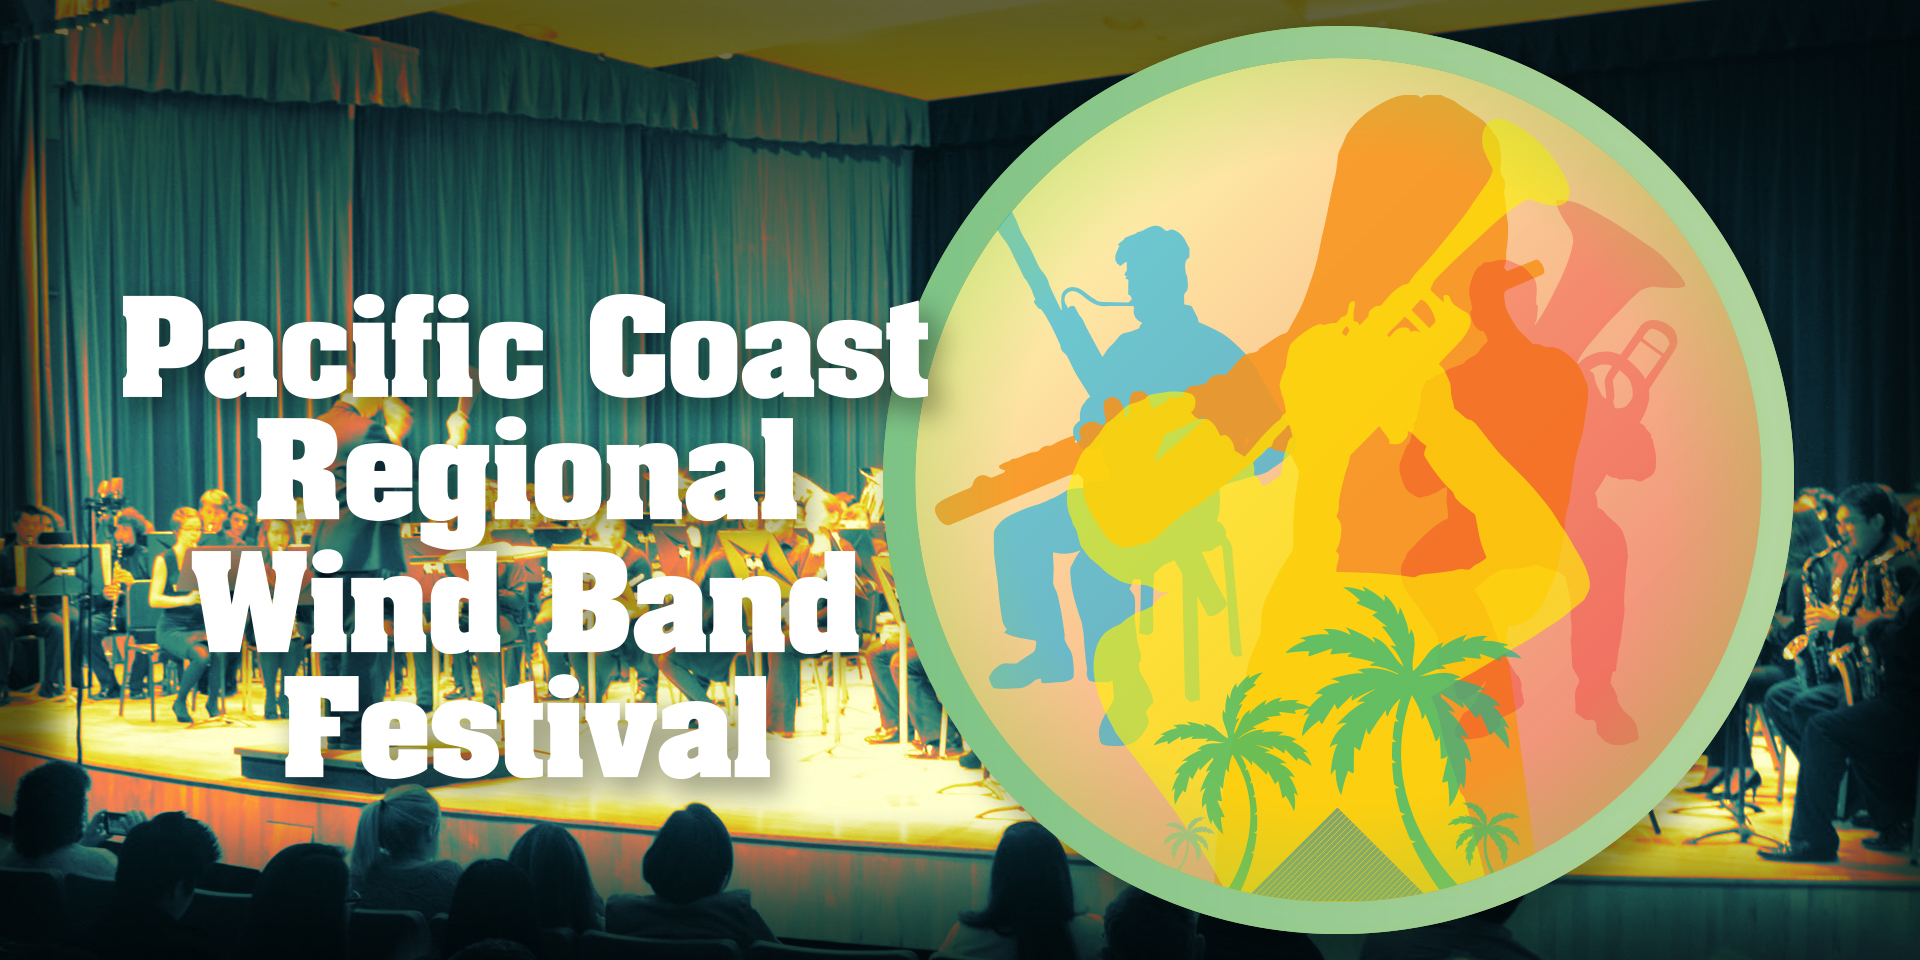 Pacific Coast Regional Wind Band Festival.